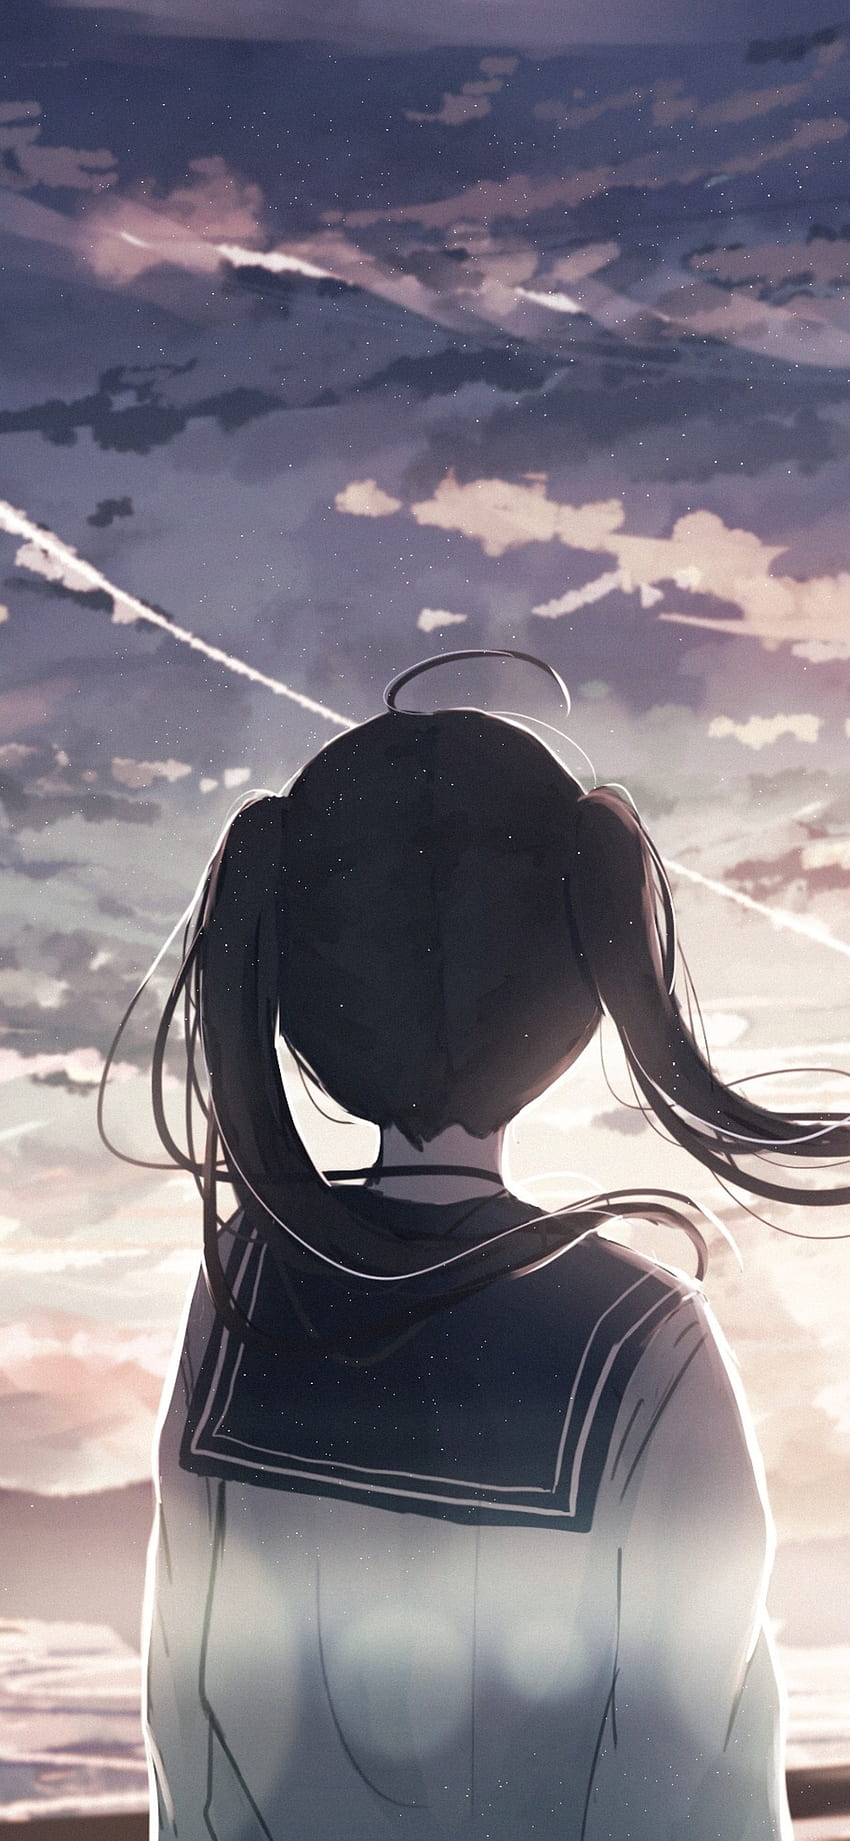 Anime girl Wallpaper 4K, Angel, Happiness